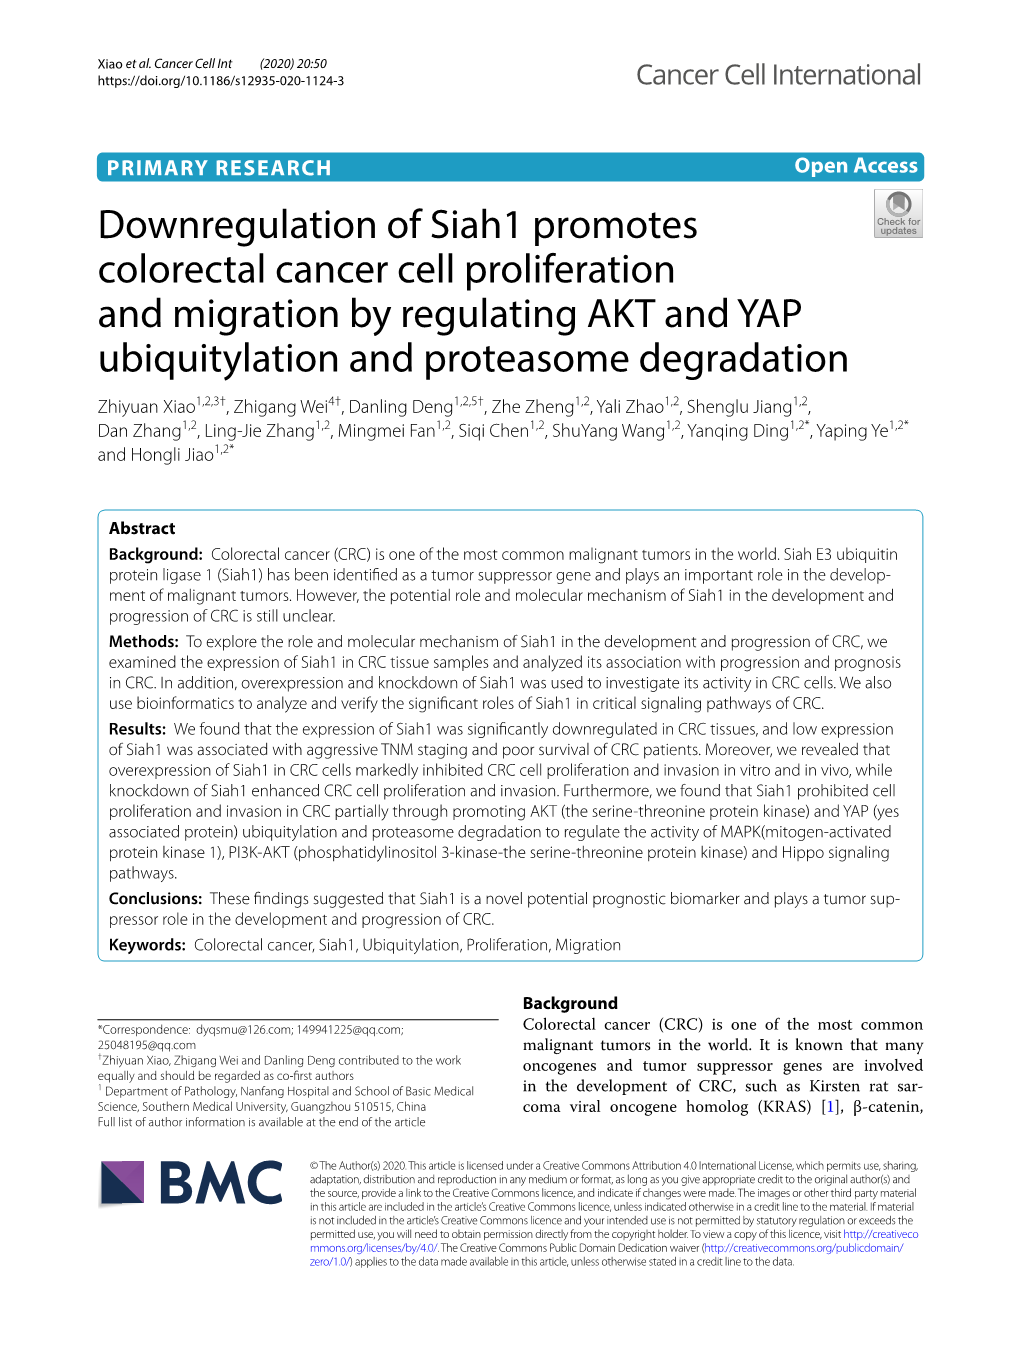 Downregulation of Siah1 Promotes Colorectal Cancer Cell Proliferation